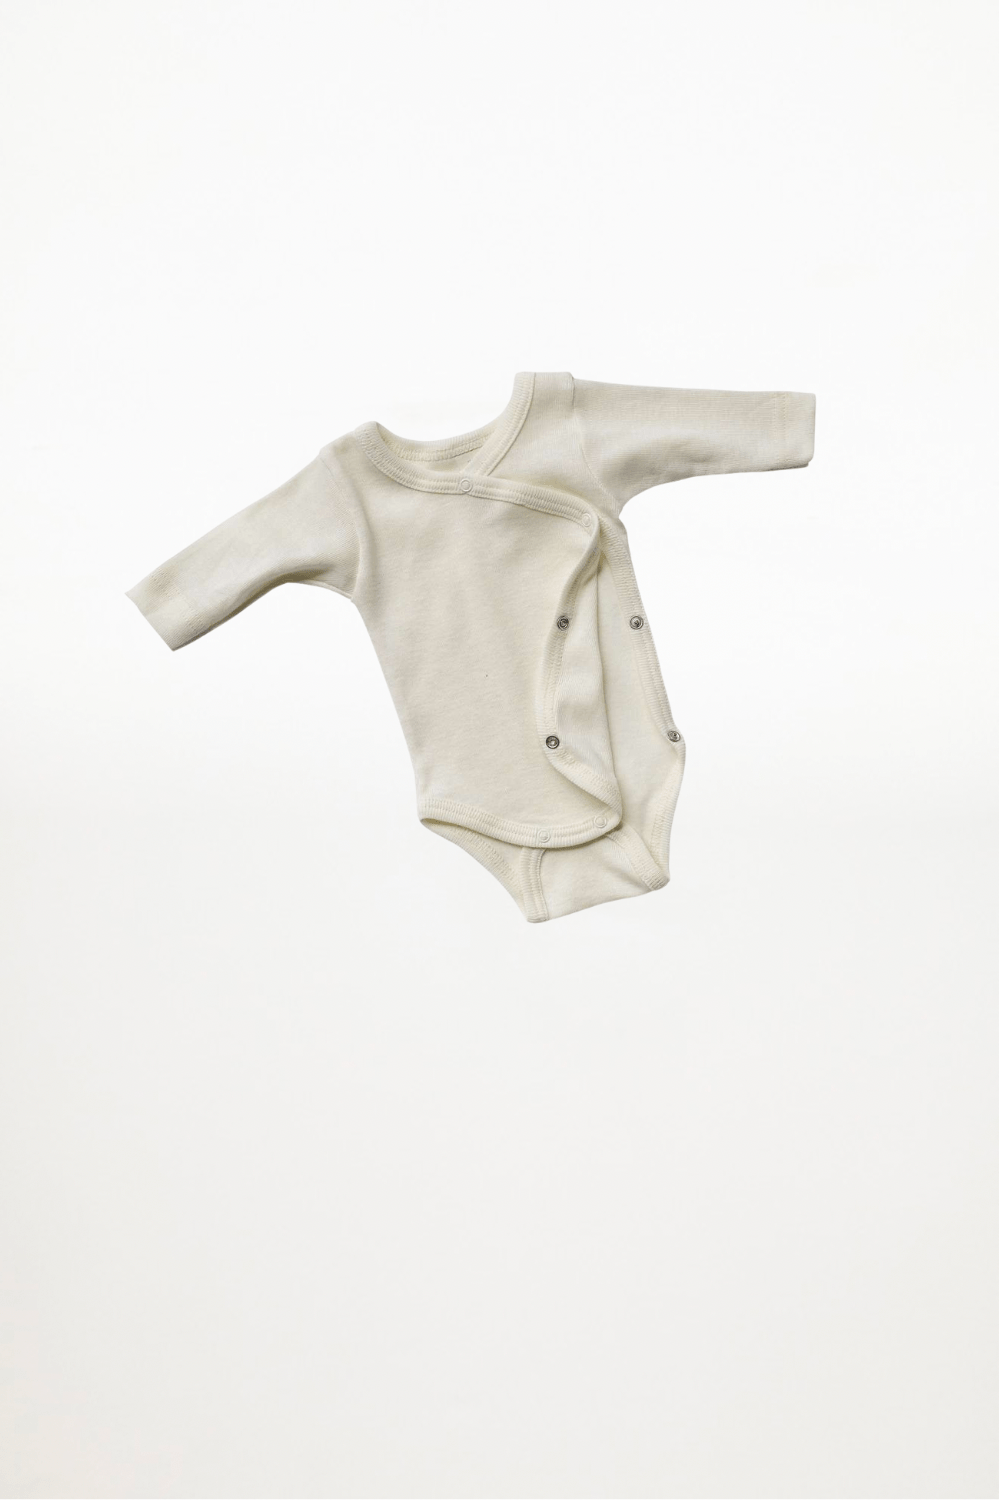 Engel - Baby Organic Wool/Silk Long Sleeved Bodysuit - Natural - Ensemble Studios